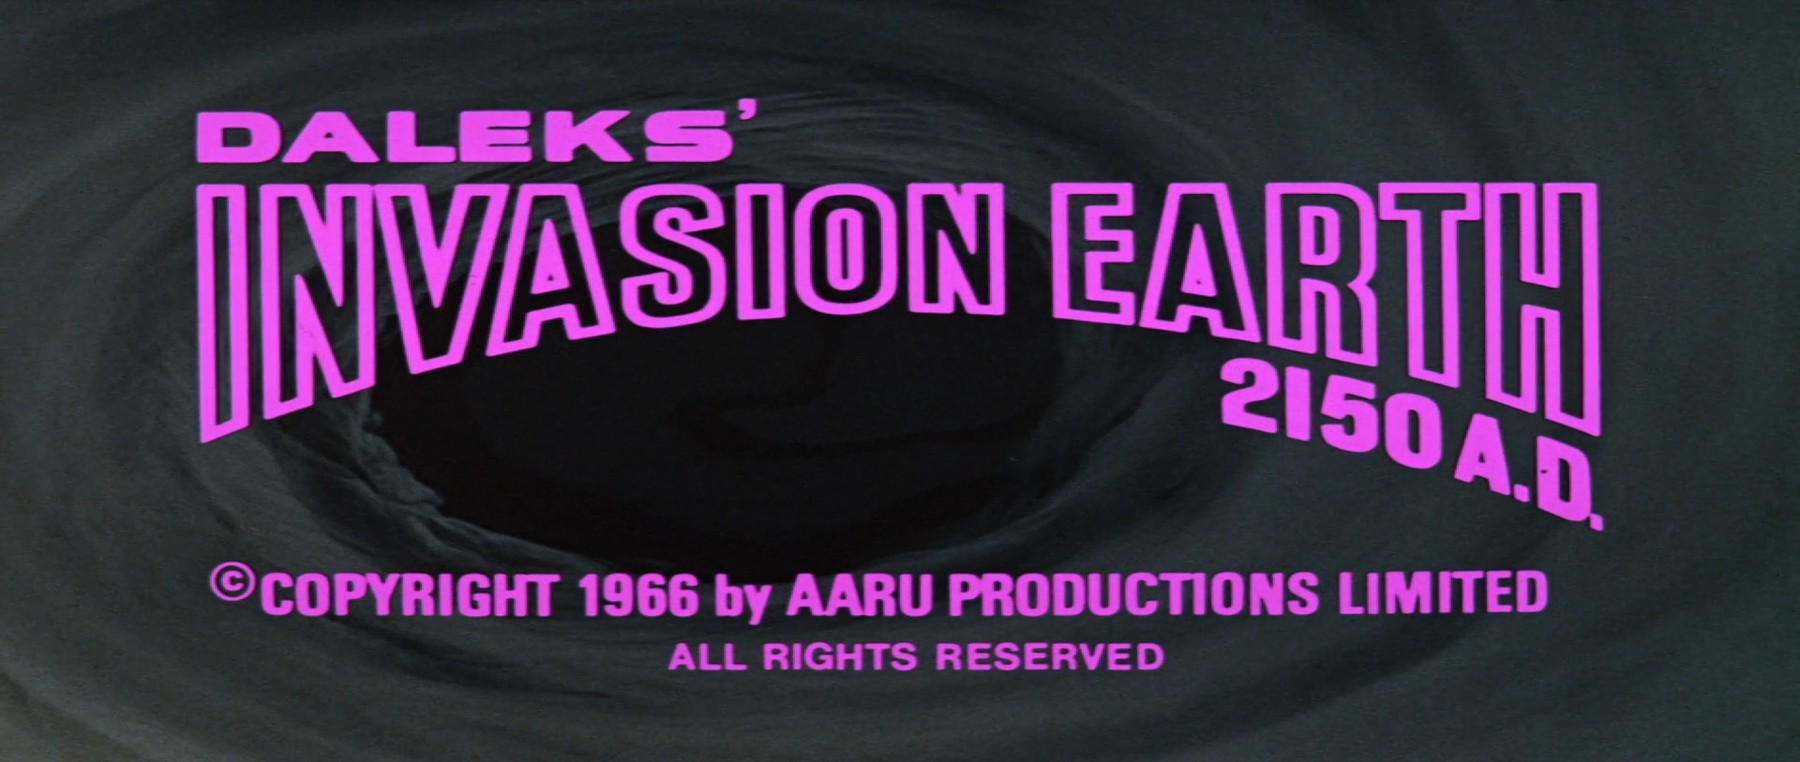 Daleks: Invasion Earth 2150 A.D. (1966)